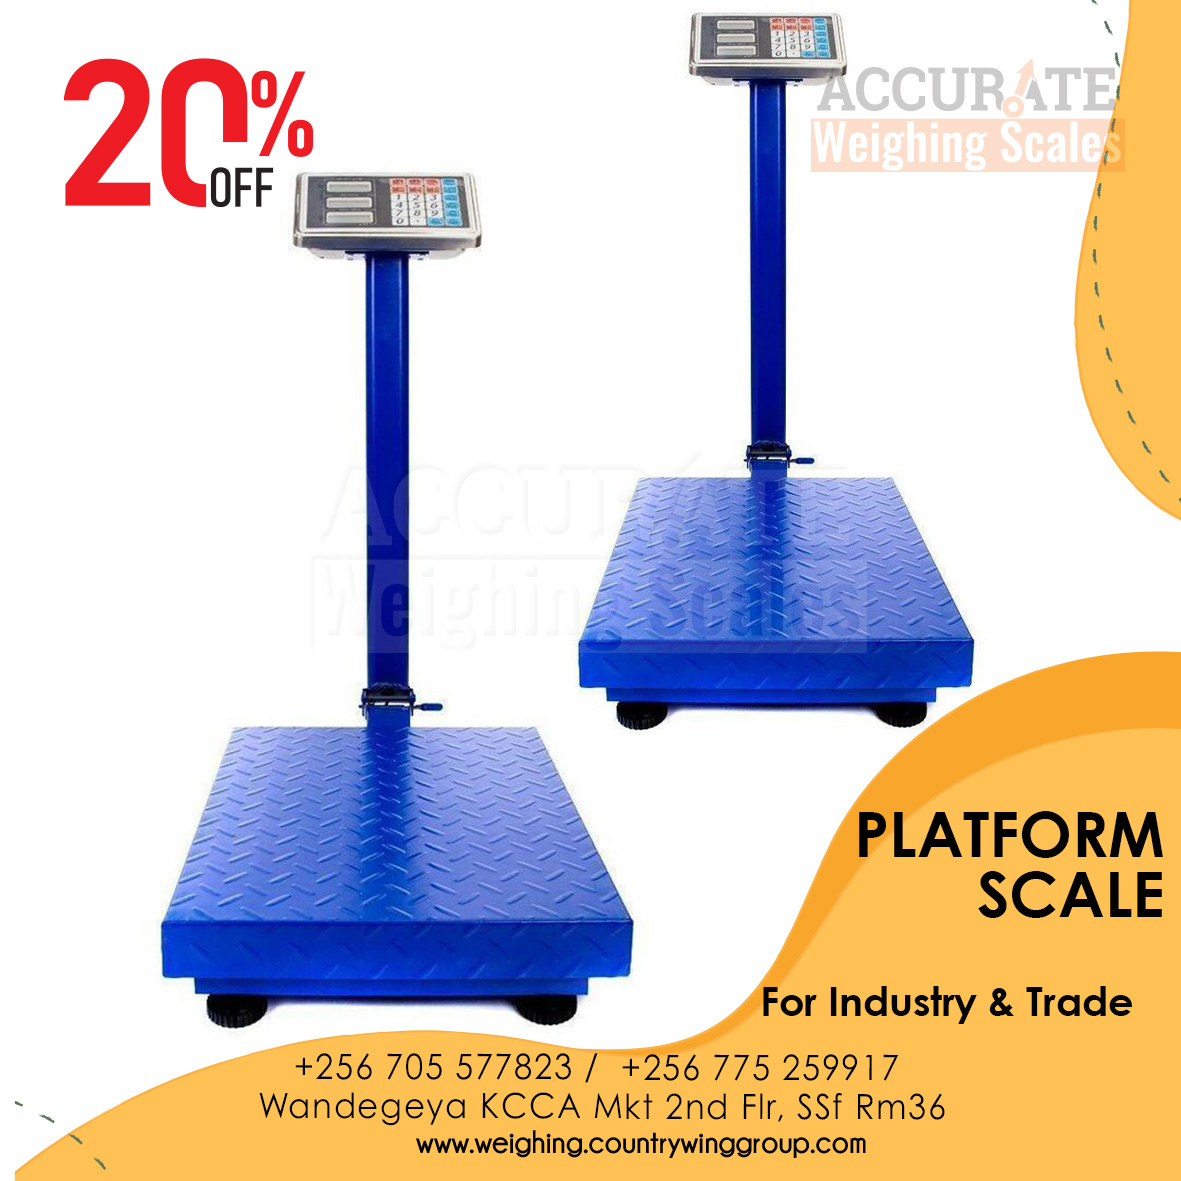 Trusted supplier of platform scales in Kampala, Kampala, Central, Uganda